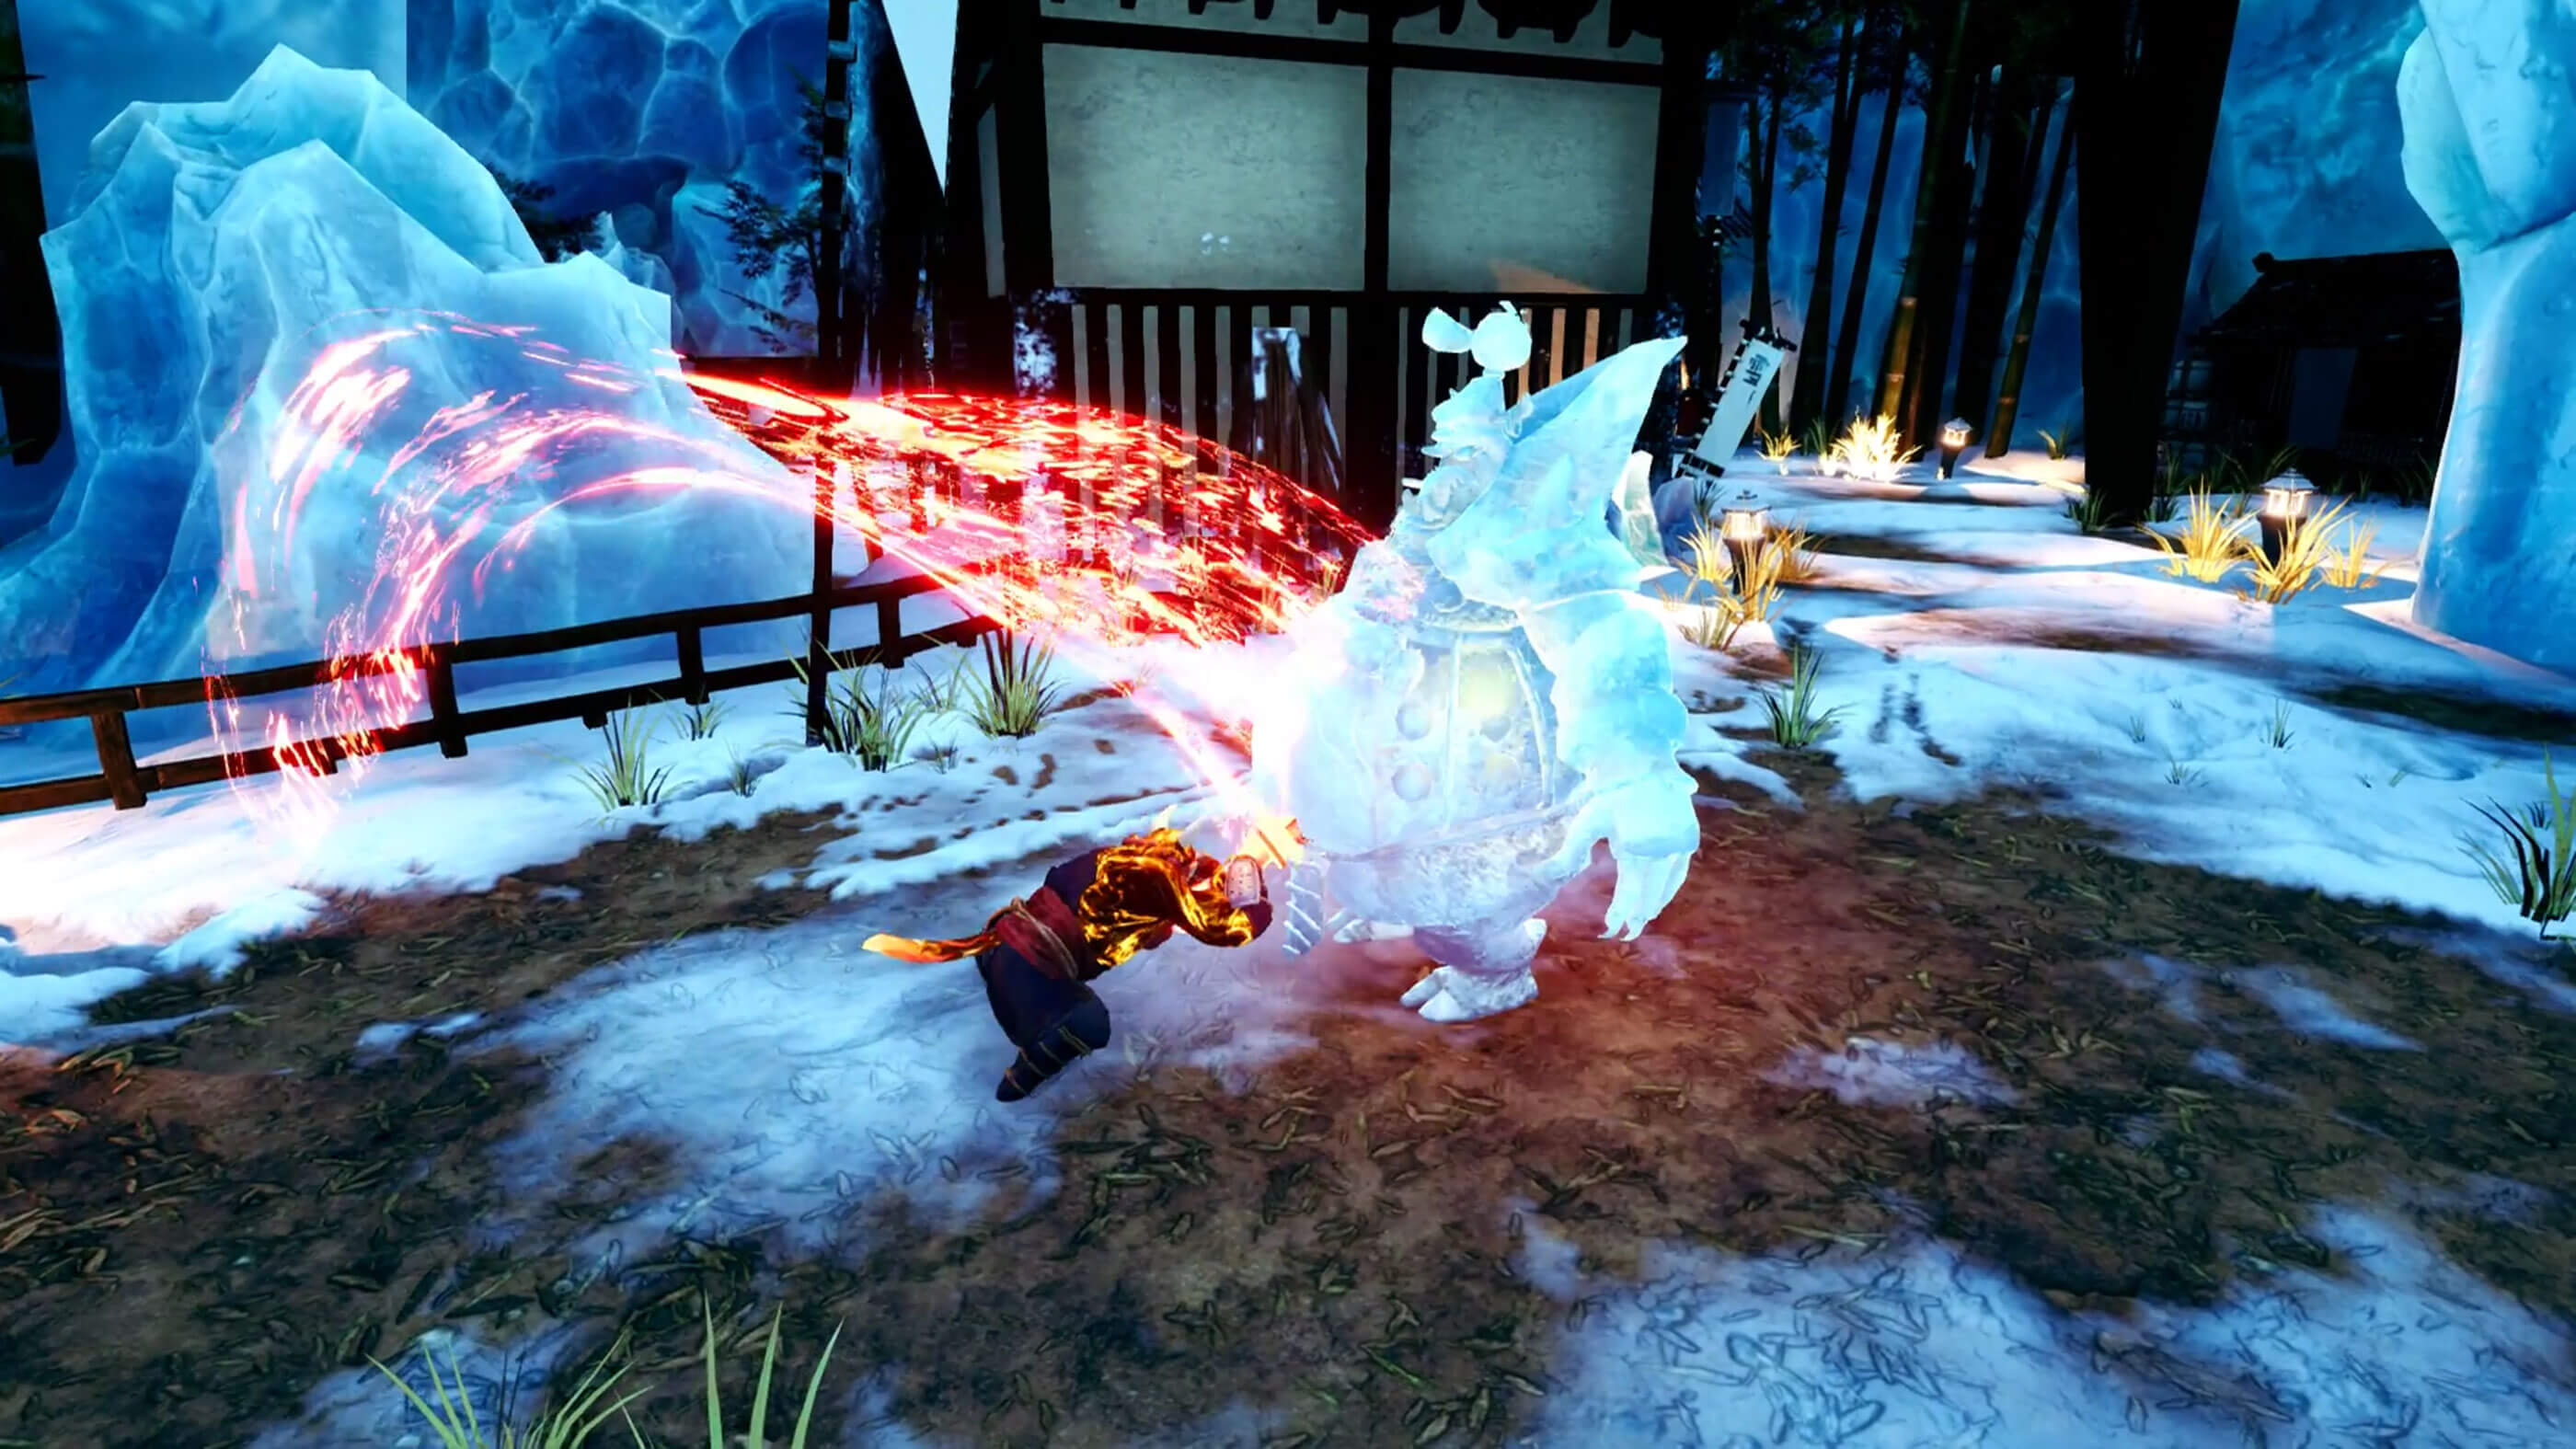 A samurai slashes a frozen enemy with a fiery blade